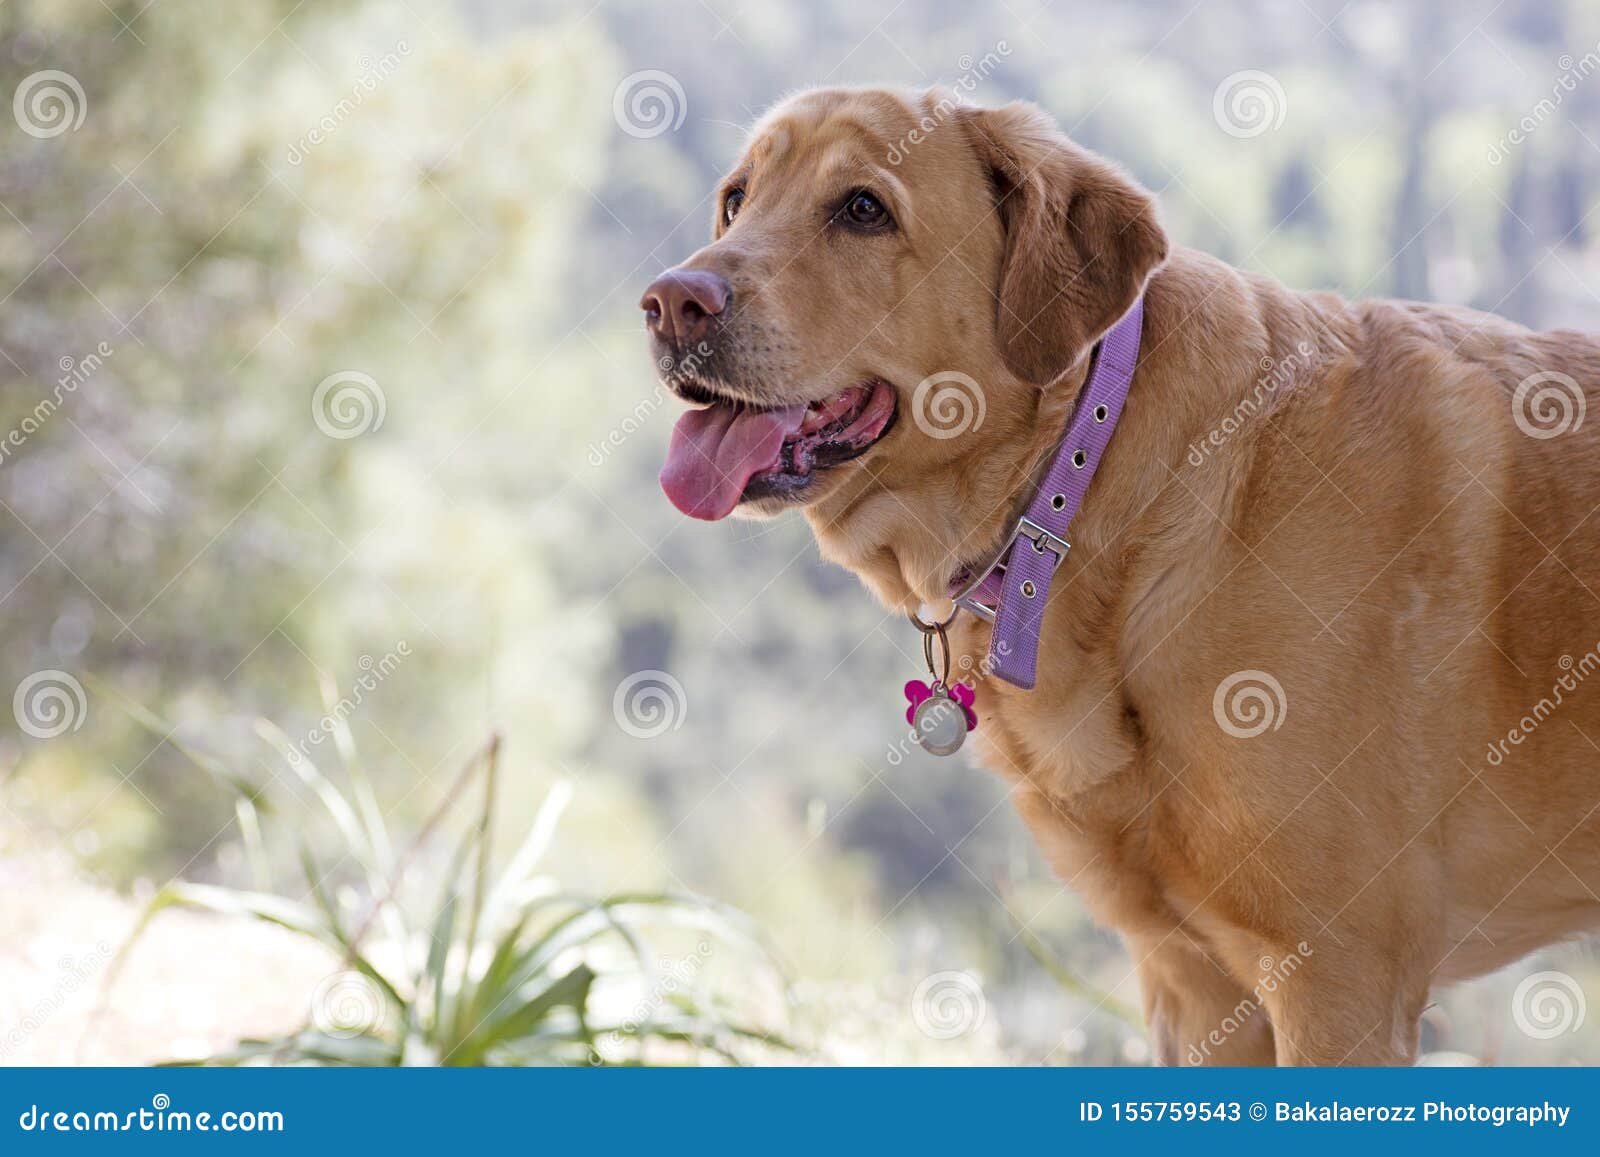 labrador female dog sweet macro portrait fifty megapixels